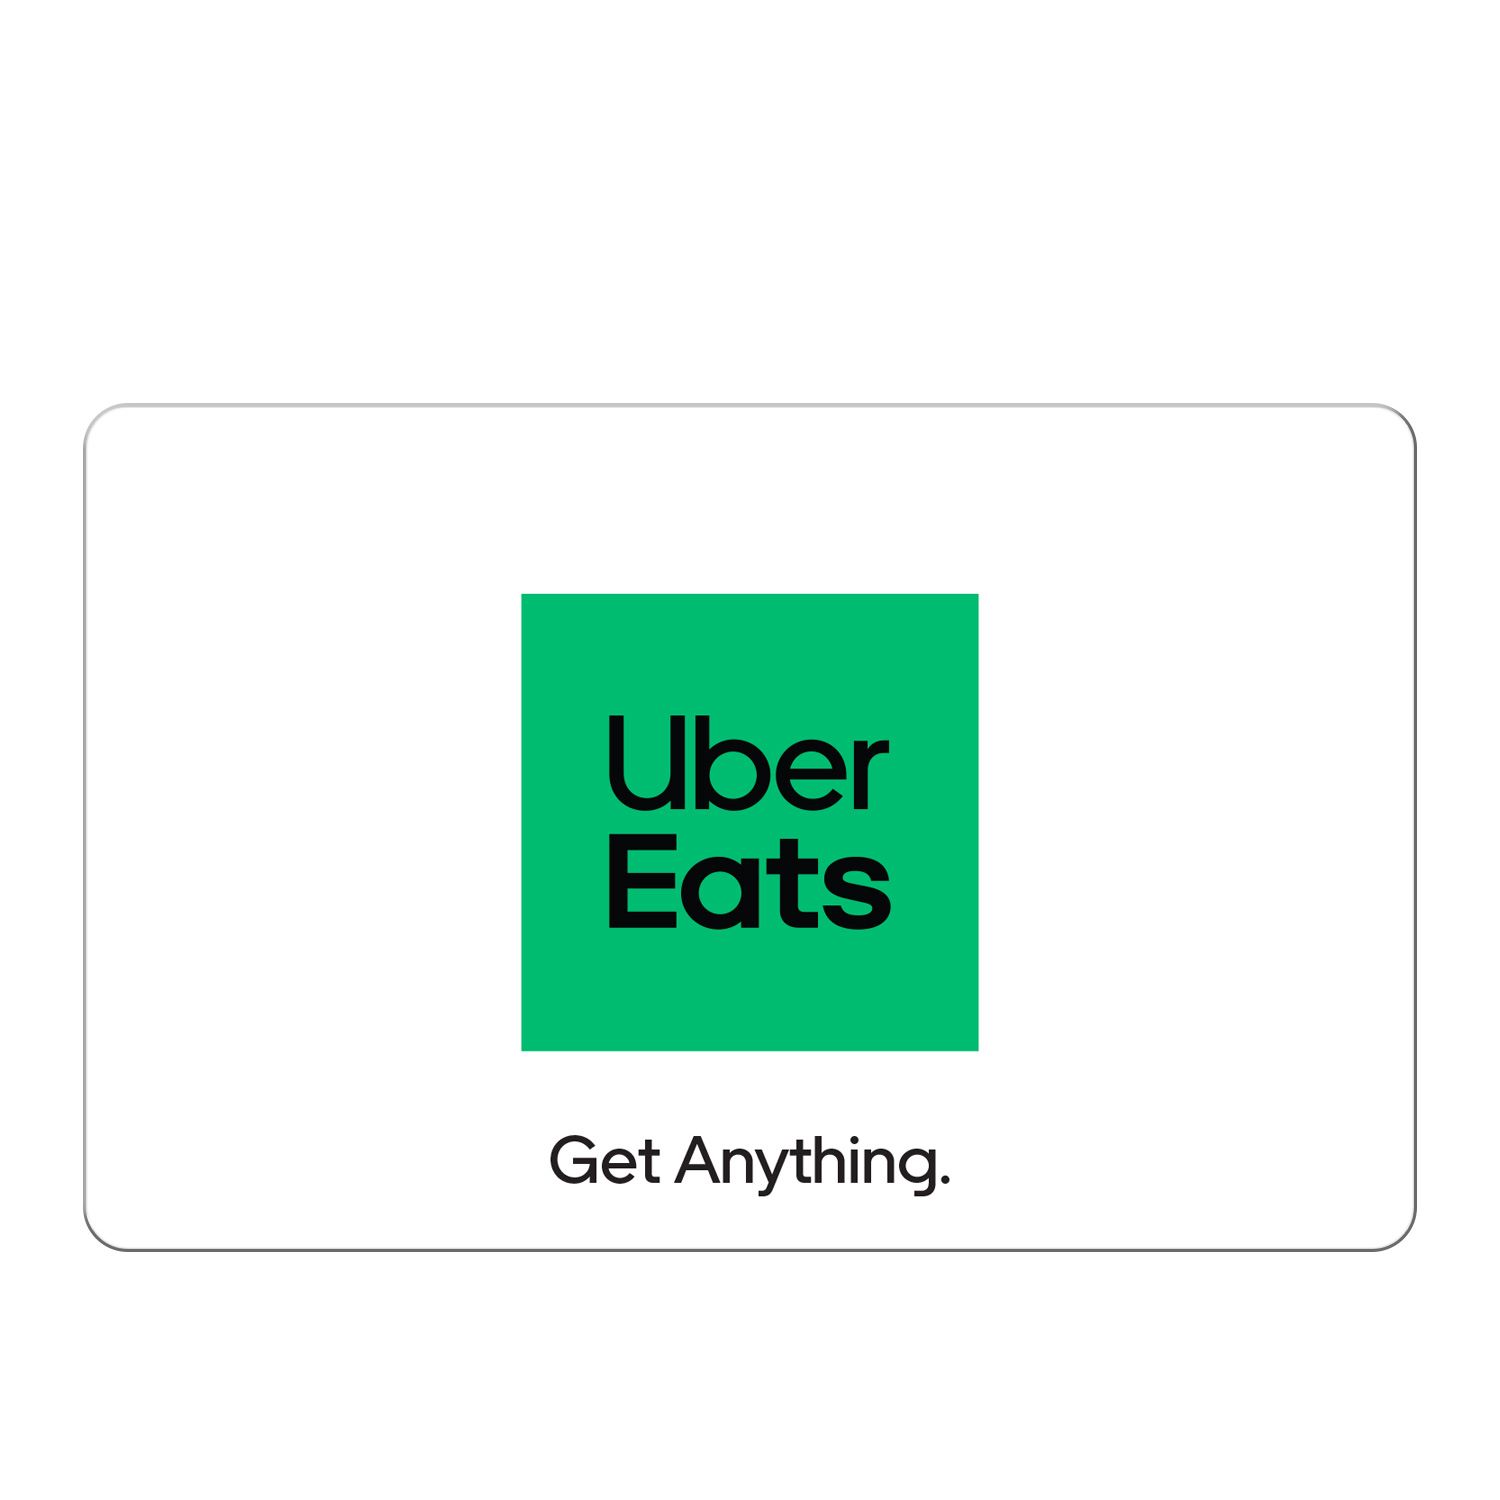 Uber Eats $100 eGift Card - image 1 of 3